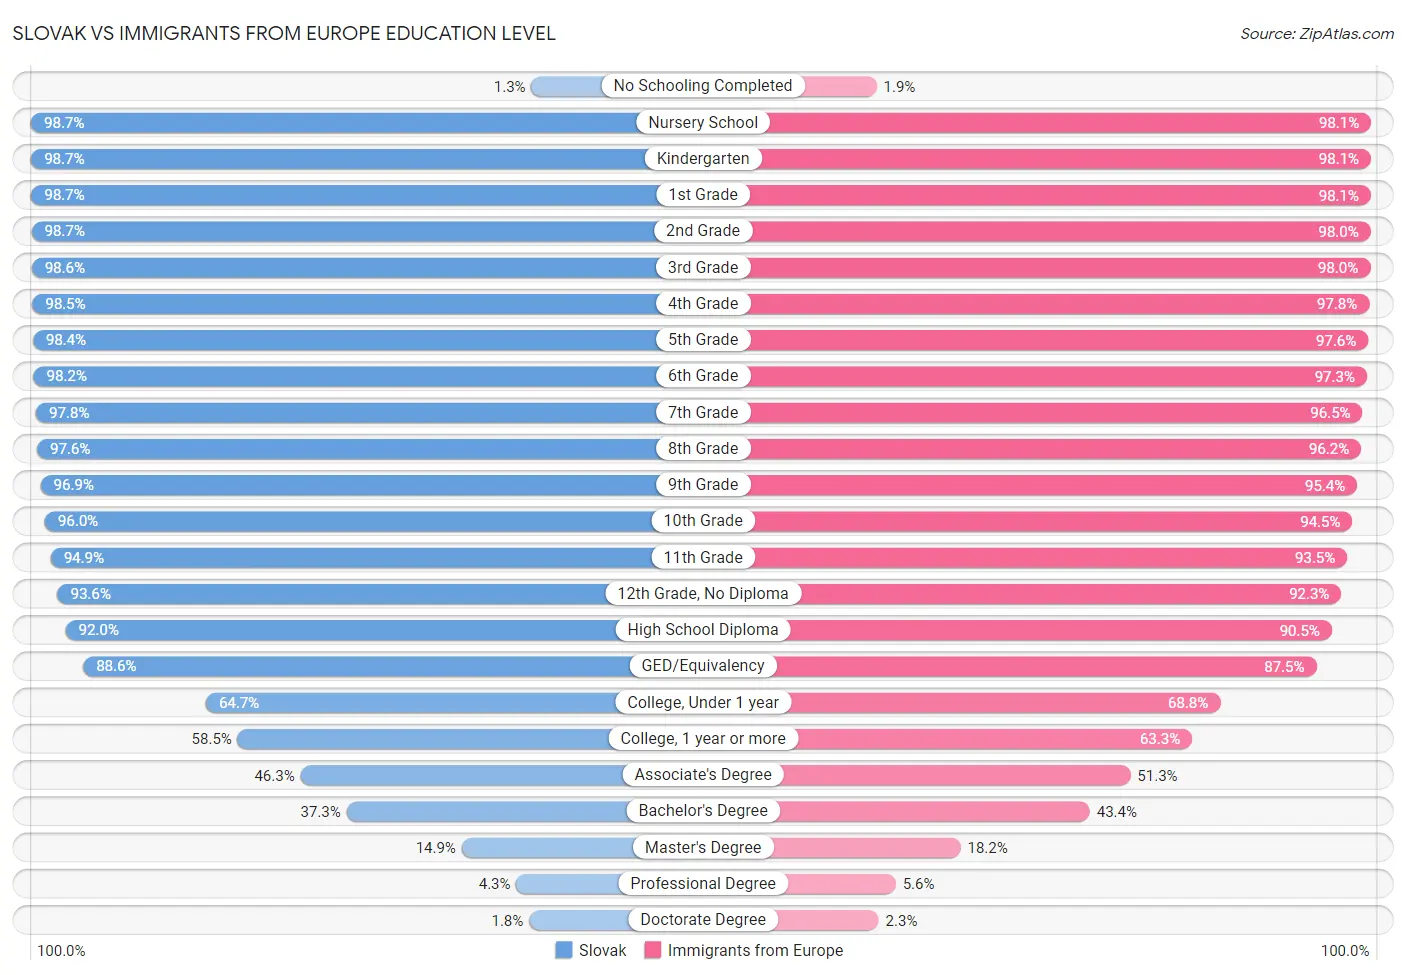 Slovak vs Immigrants from Europe Education Level